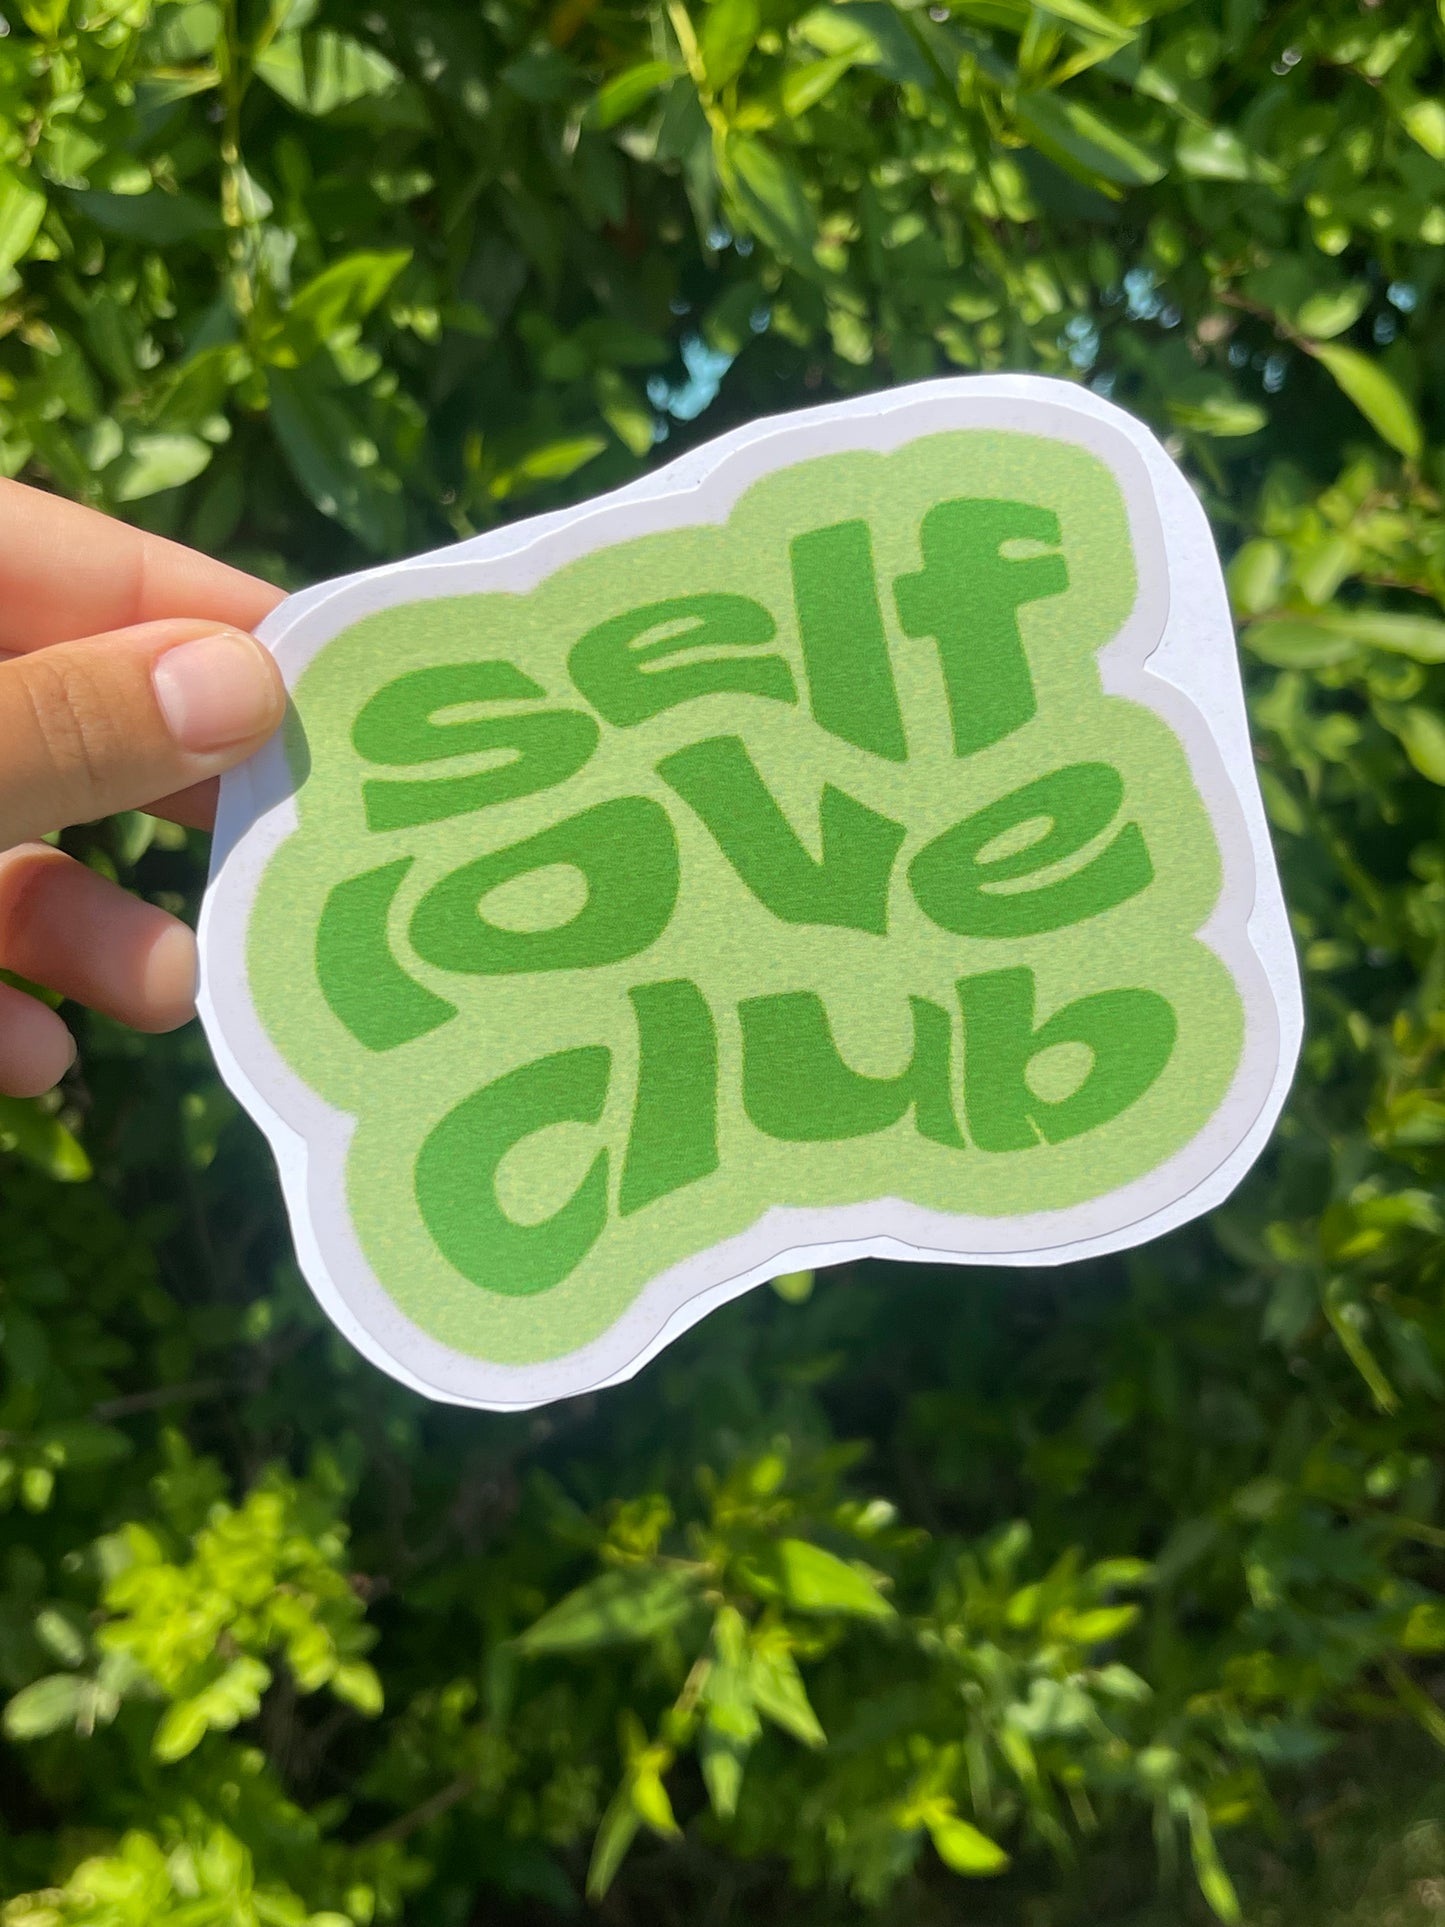 Self Love Club - Sticker